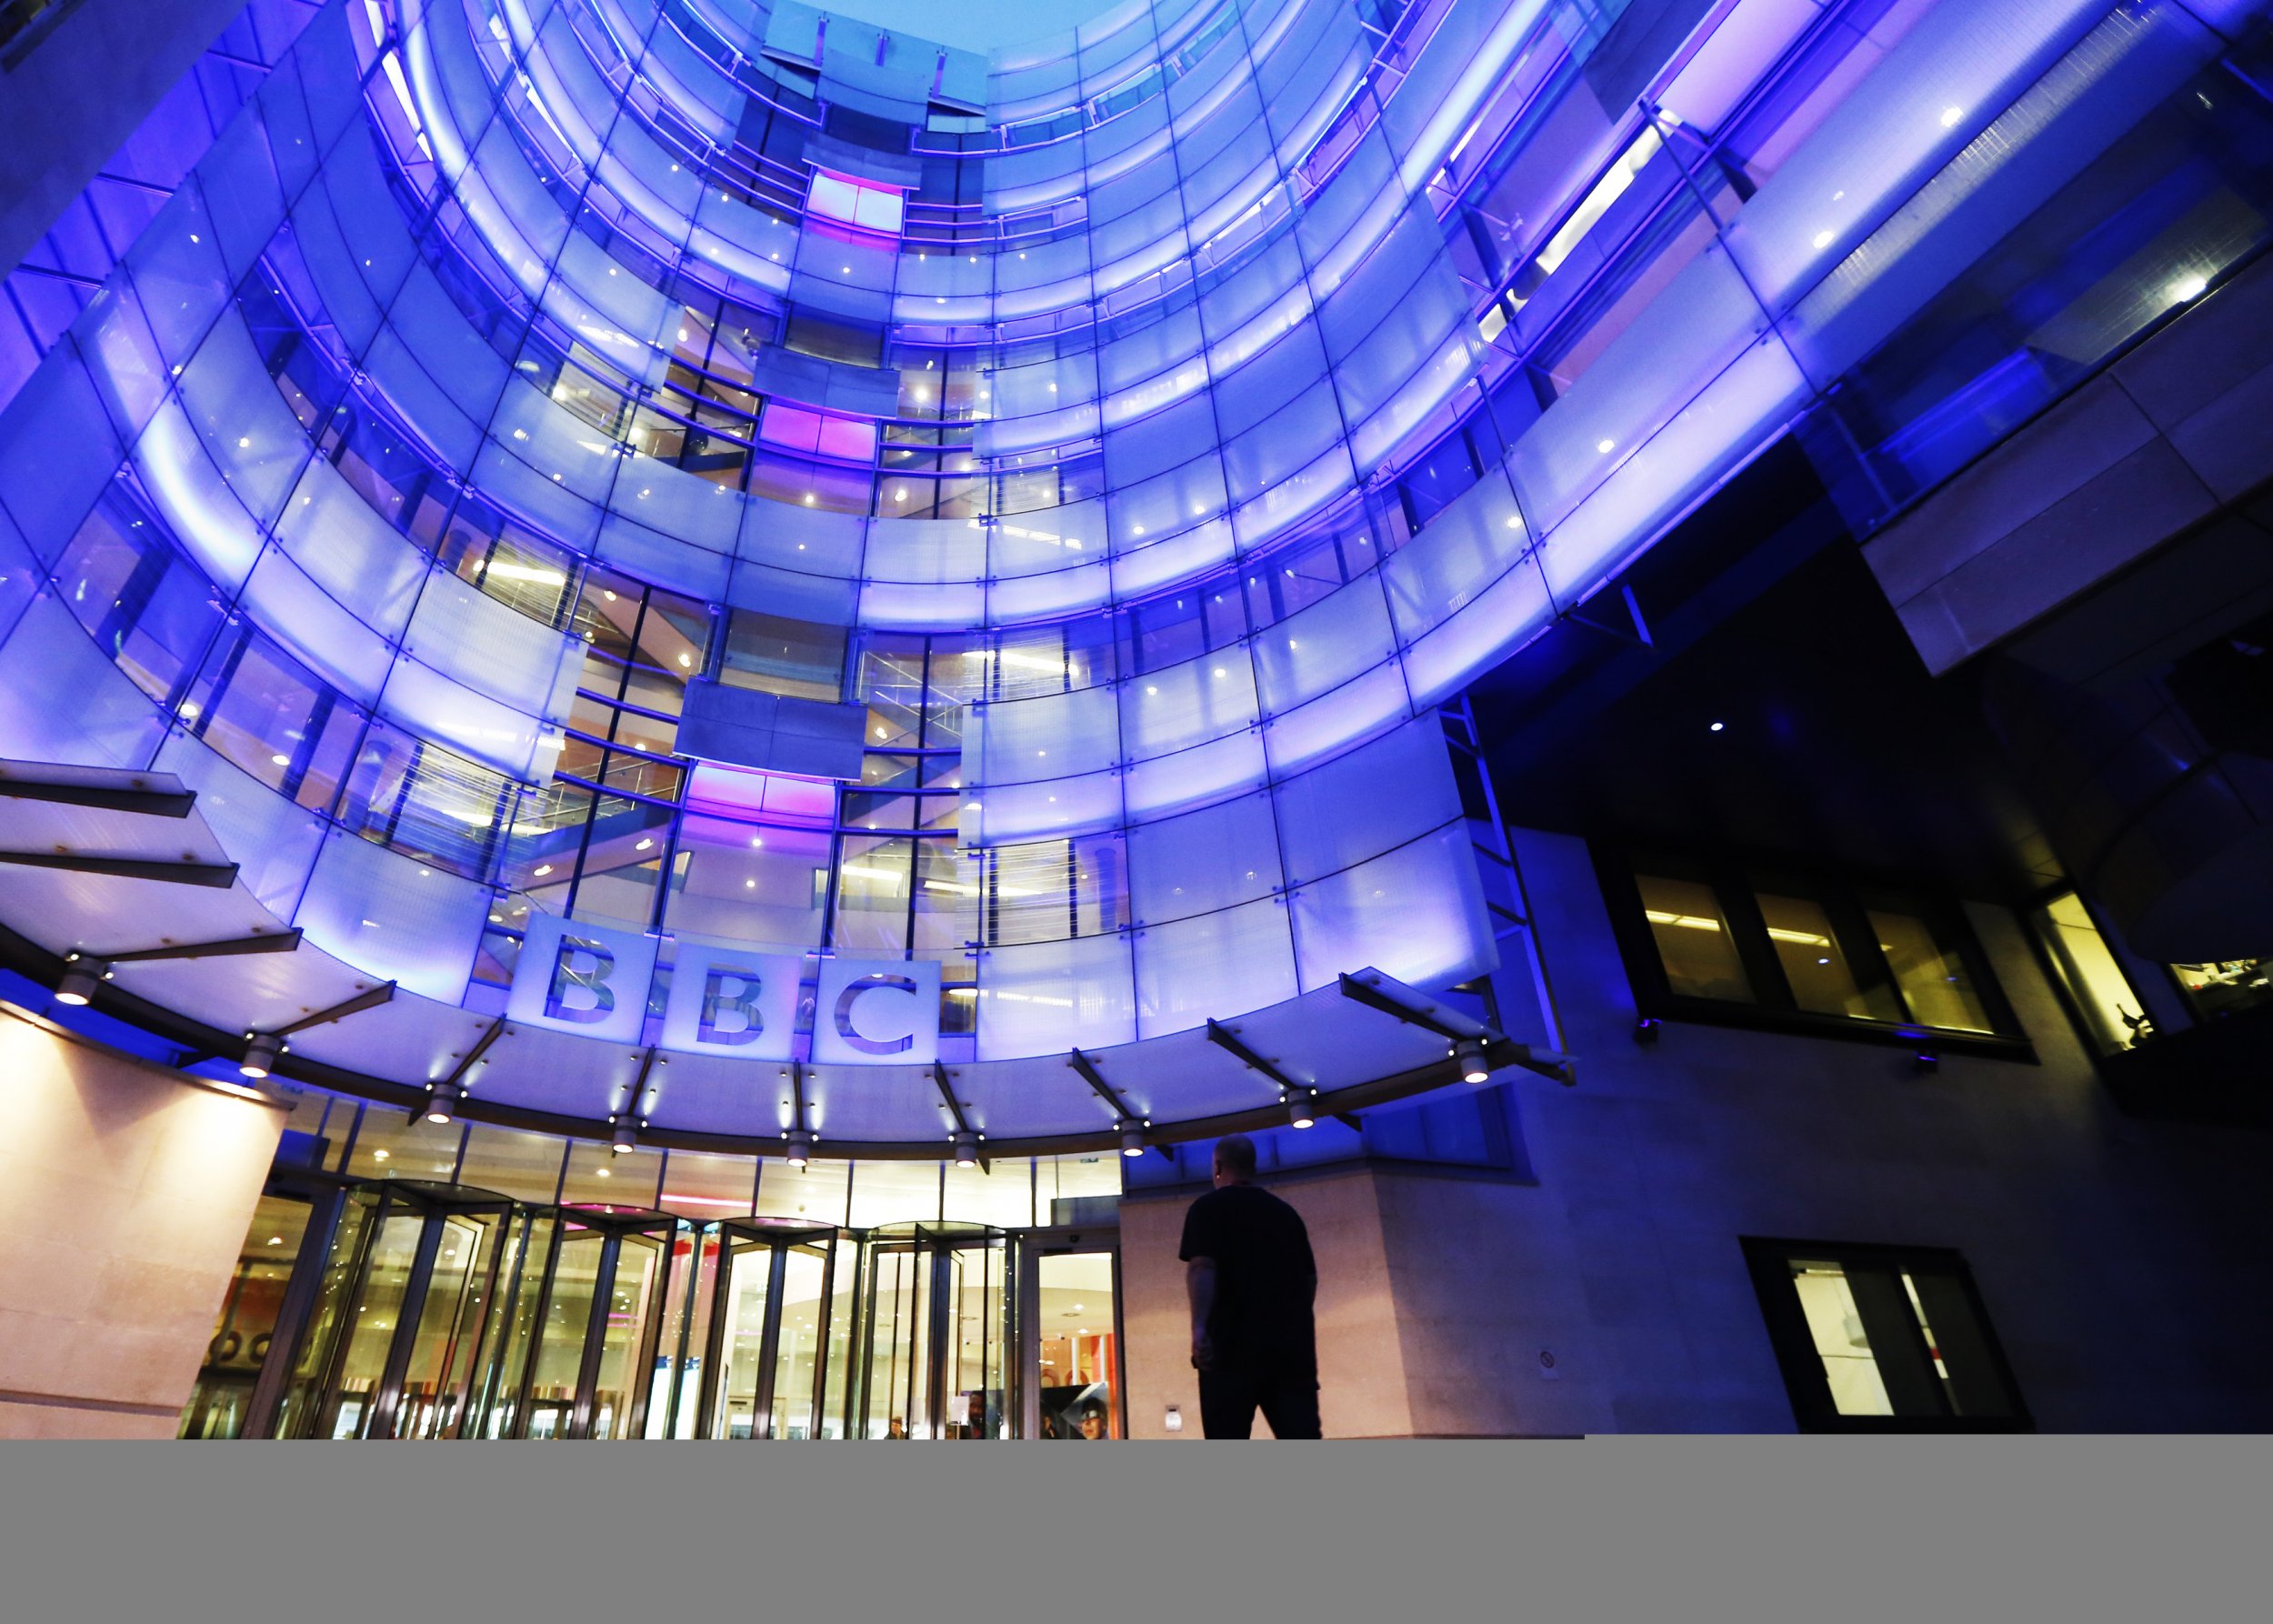  BBC New Broadcasting House